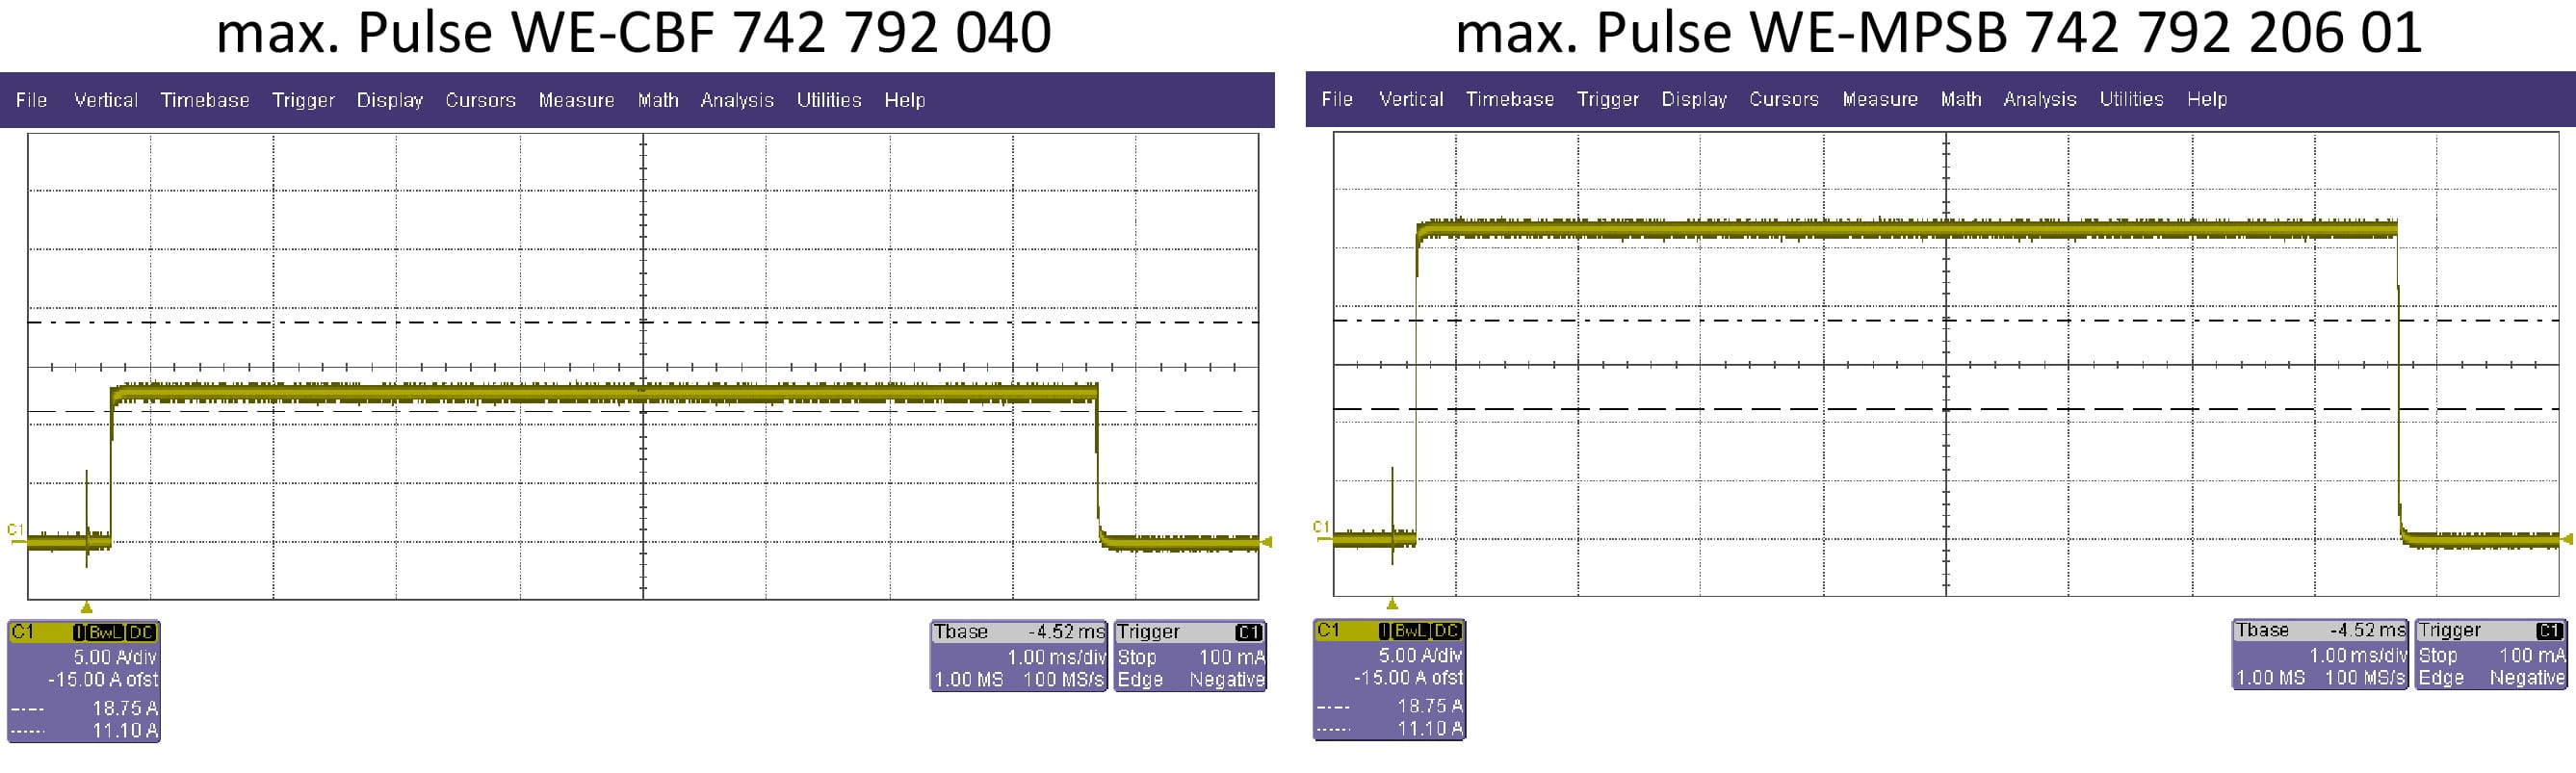 06 comp. pulse load capabiliy CBF-MPSB